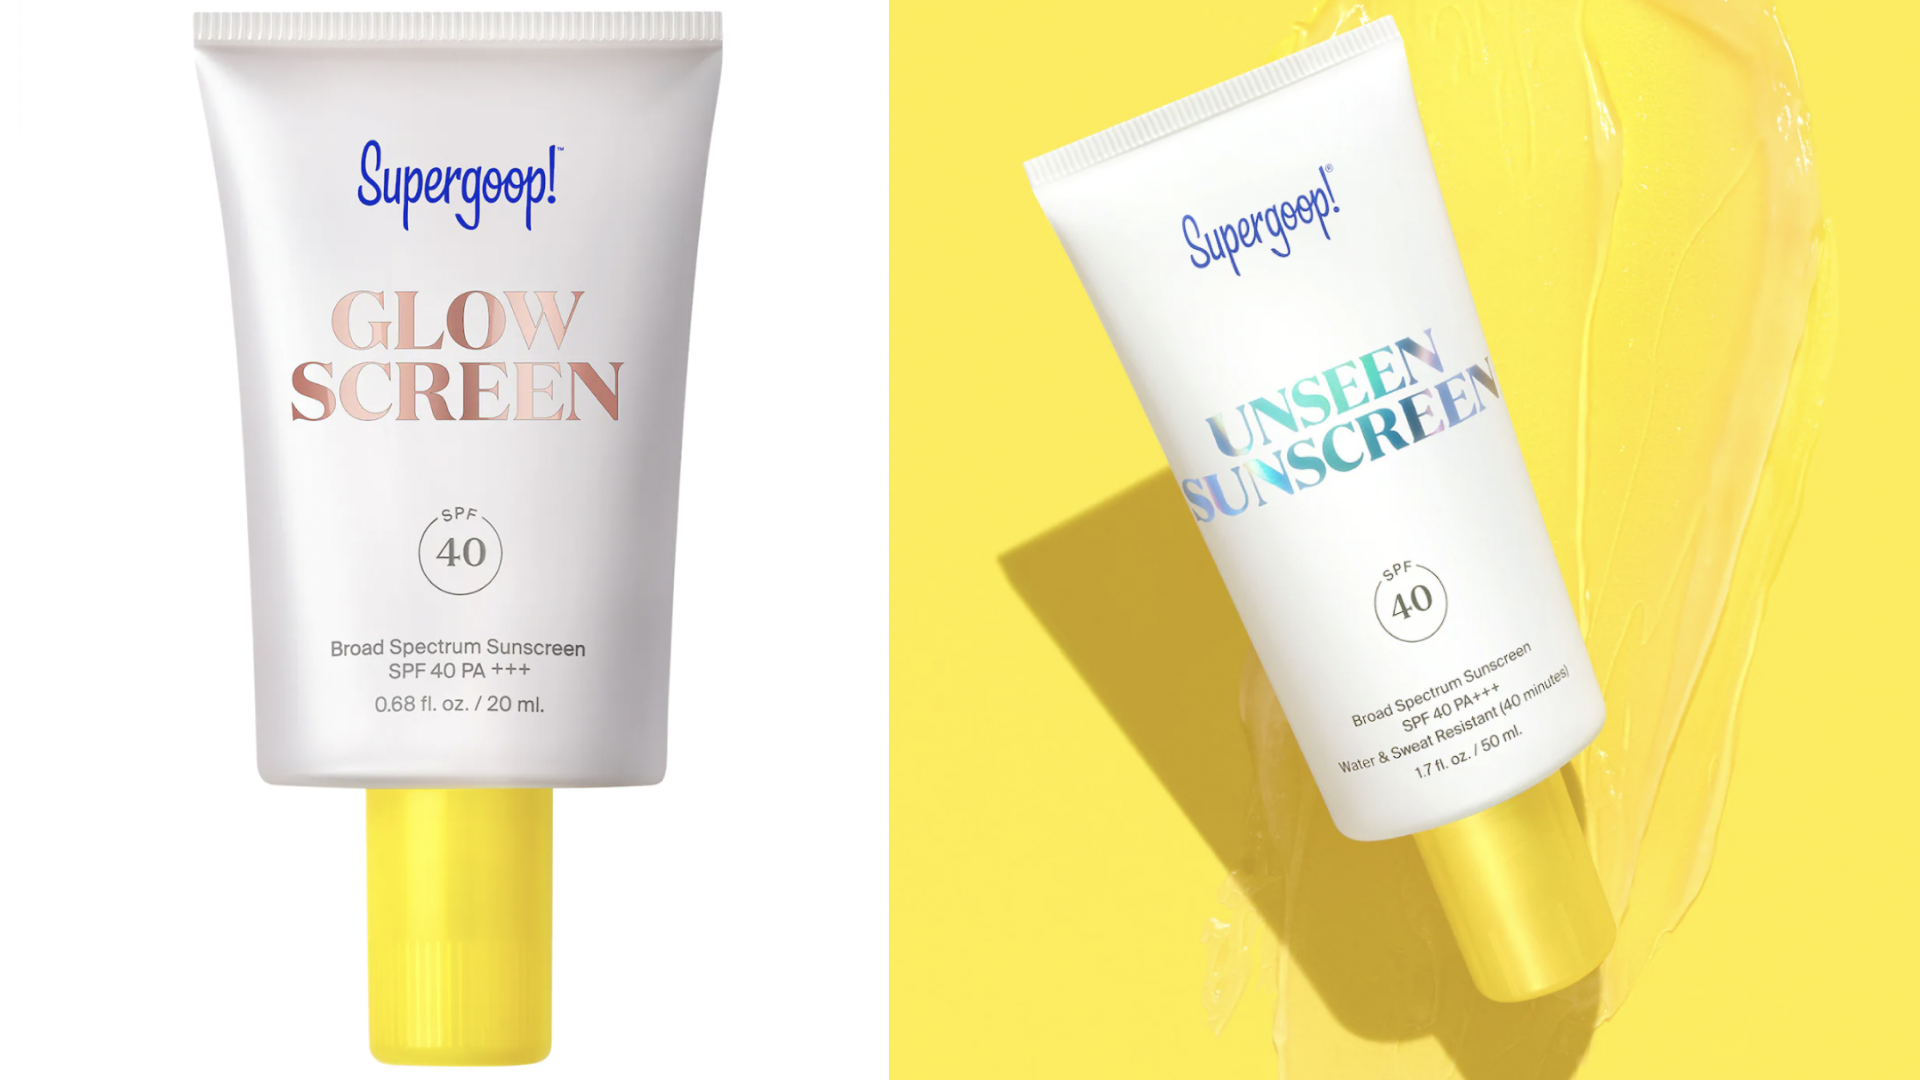 Supergroup sunscreen glowing skin